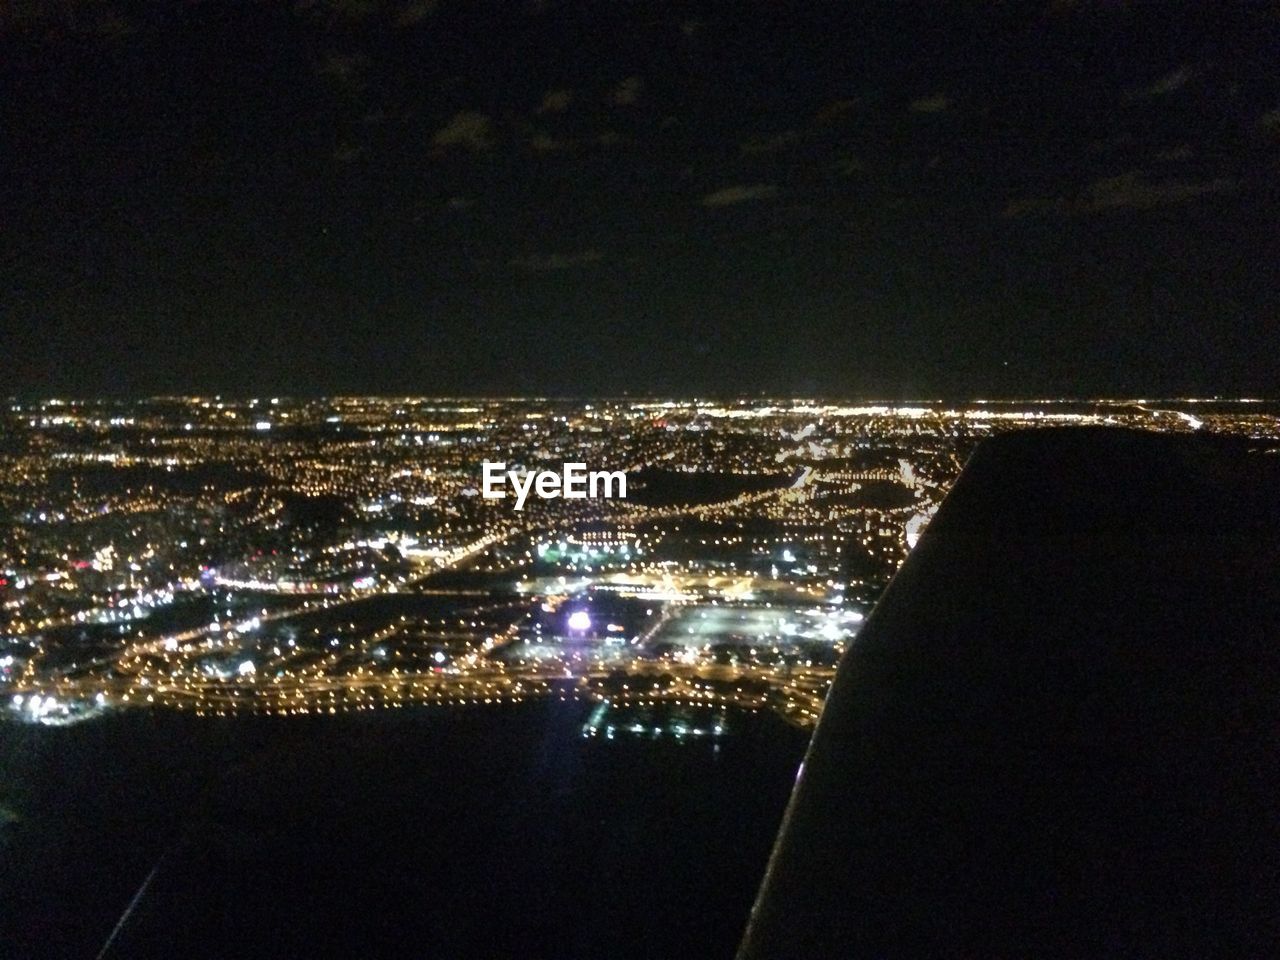 Cropped image of airplane flying over illuminated city